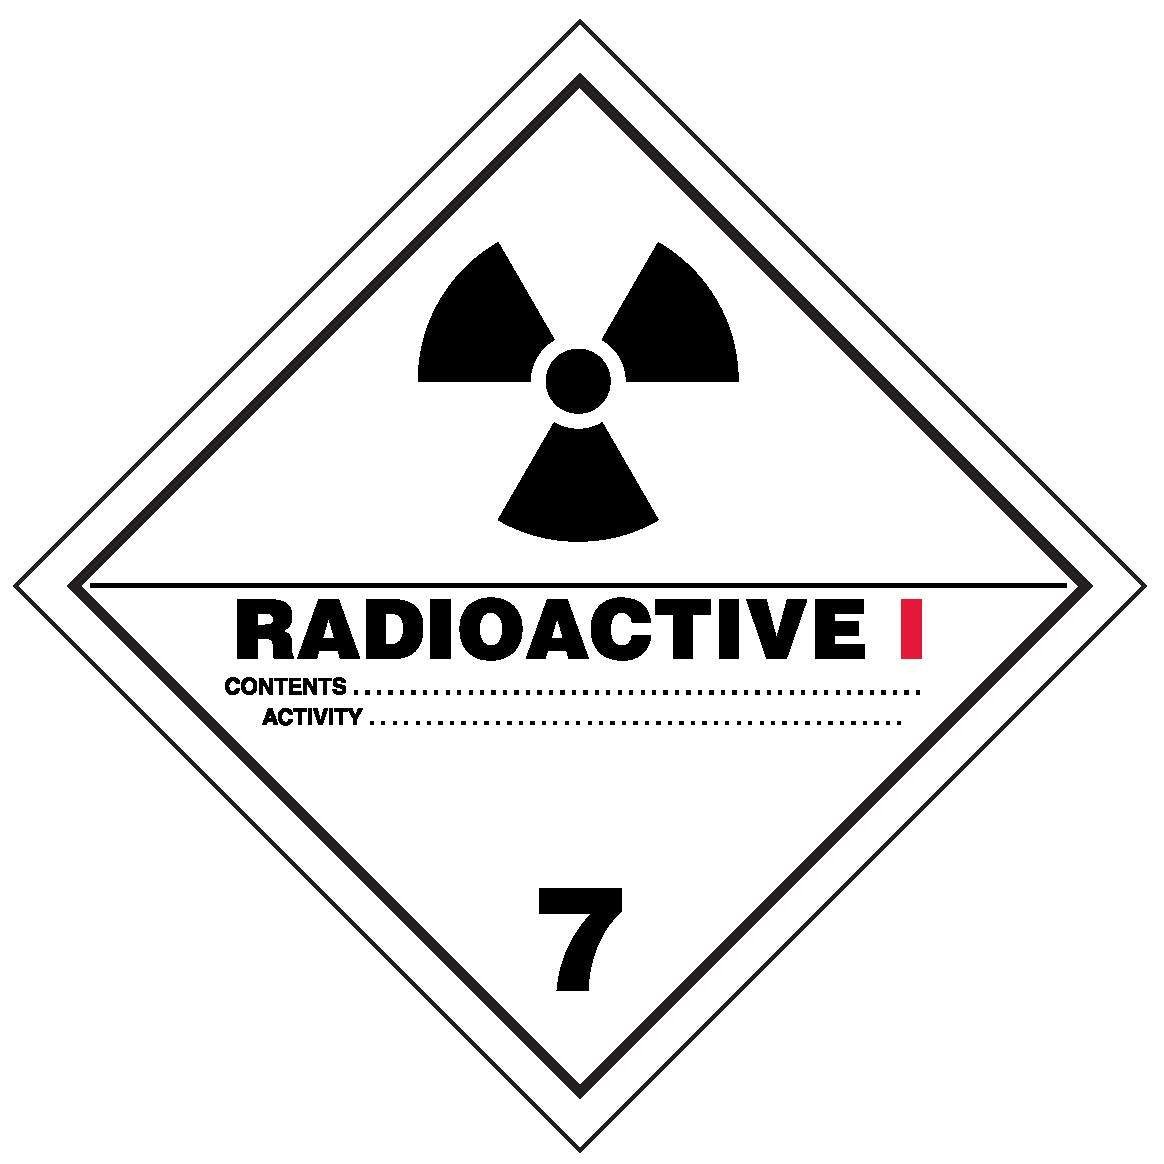 Radioactive 1 Class 7